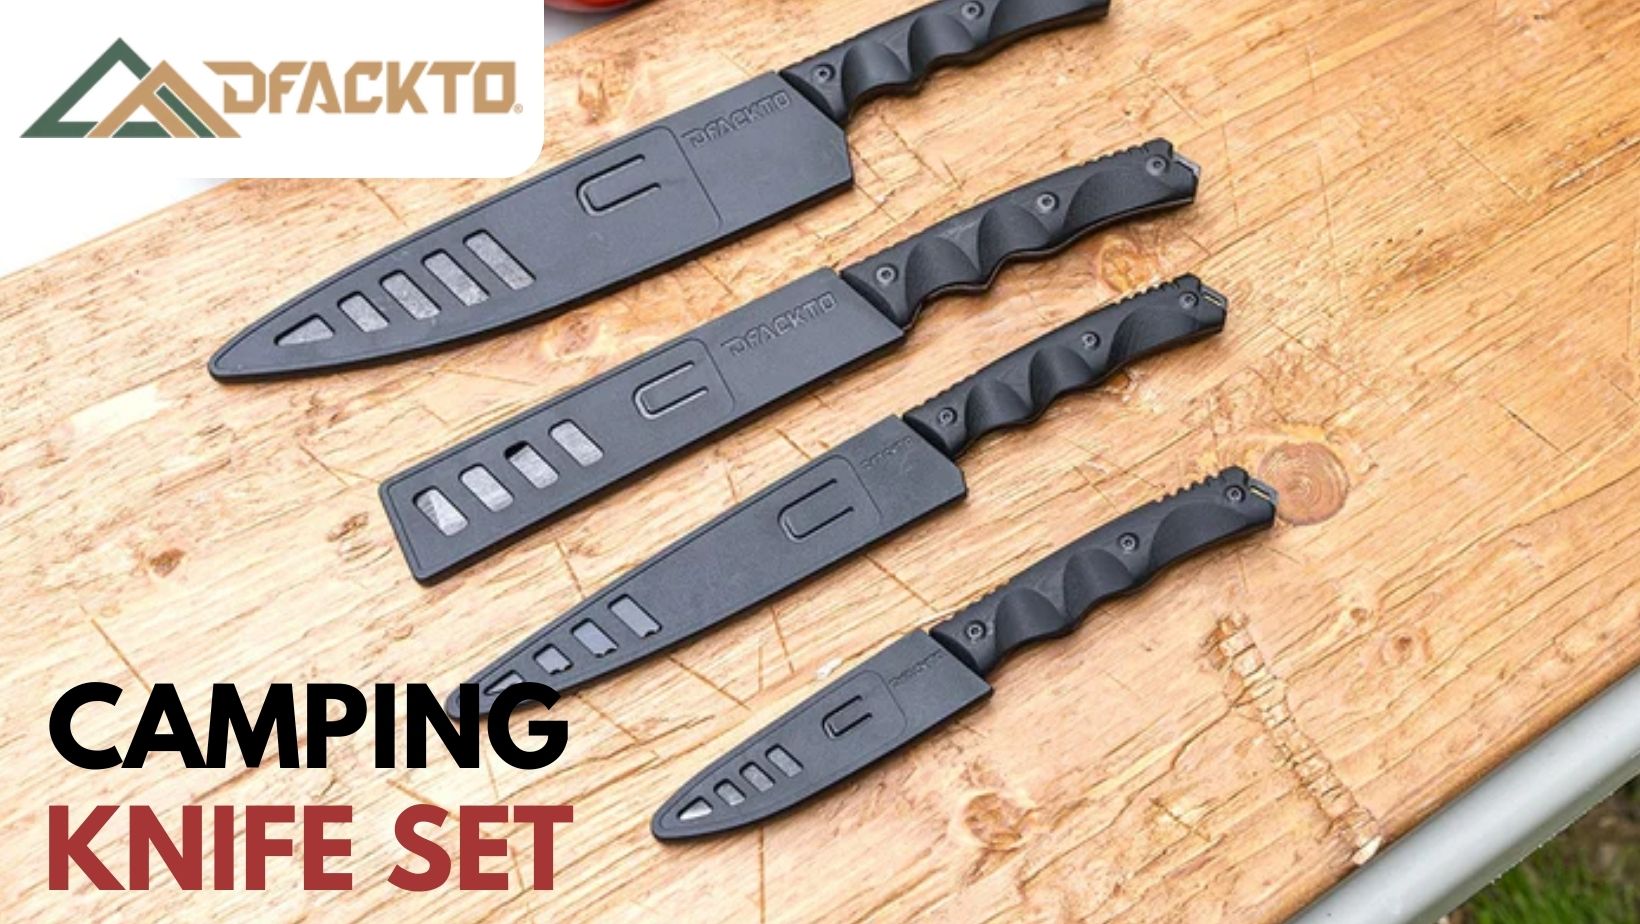 Fixed Blade vs. Folding: Choosing the Right Camping Knife Set